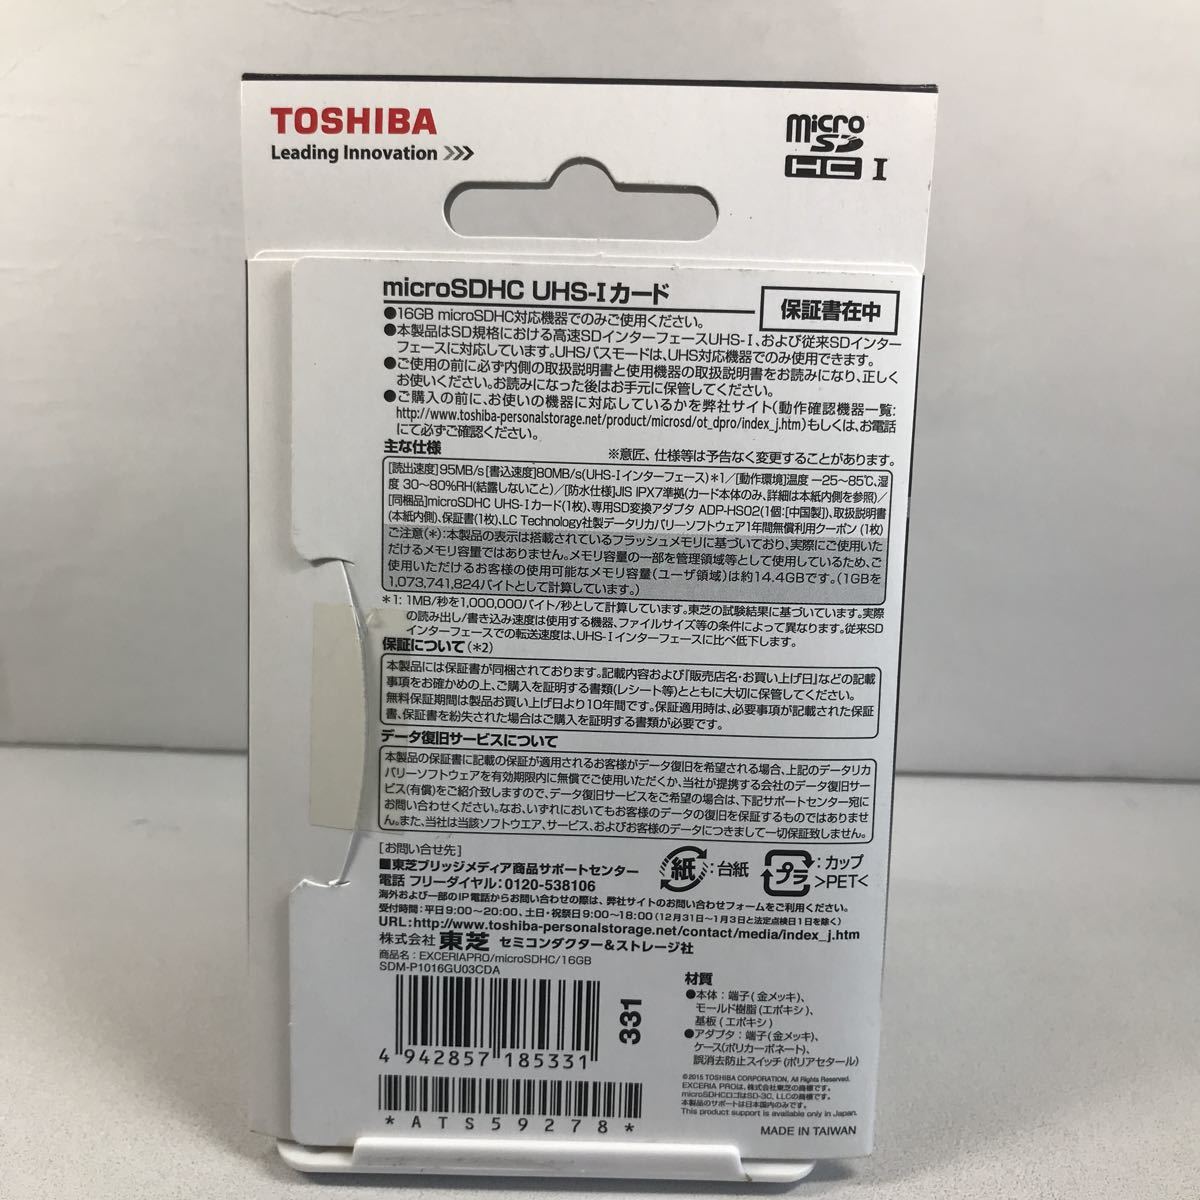  Toshiba microSDHC карта 16GB(EXCERIA PRO) новый товар не использовался )( дом хранение товар )